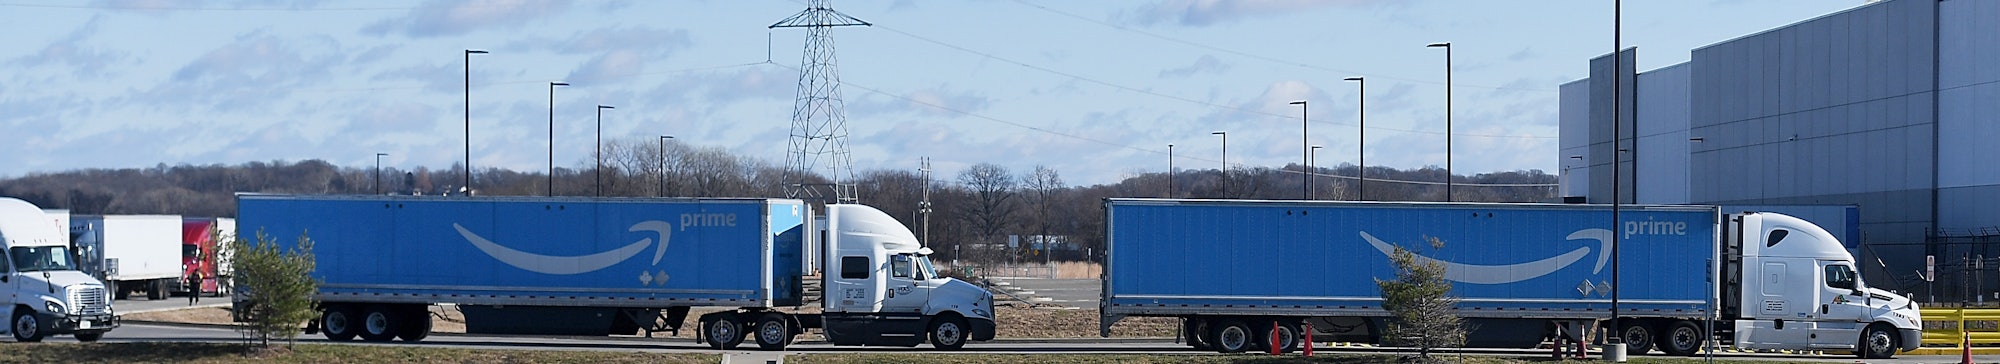 EDWARDSVILLE, IL - DECEMBER 11: Arriving Amazon shipment trucks are seen staged near the damaged Ama...